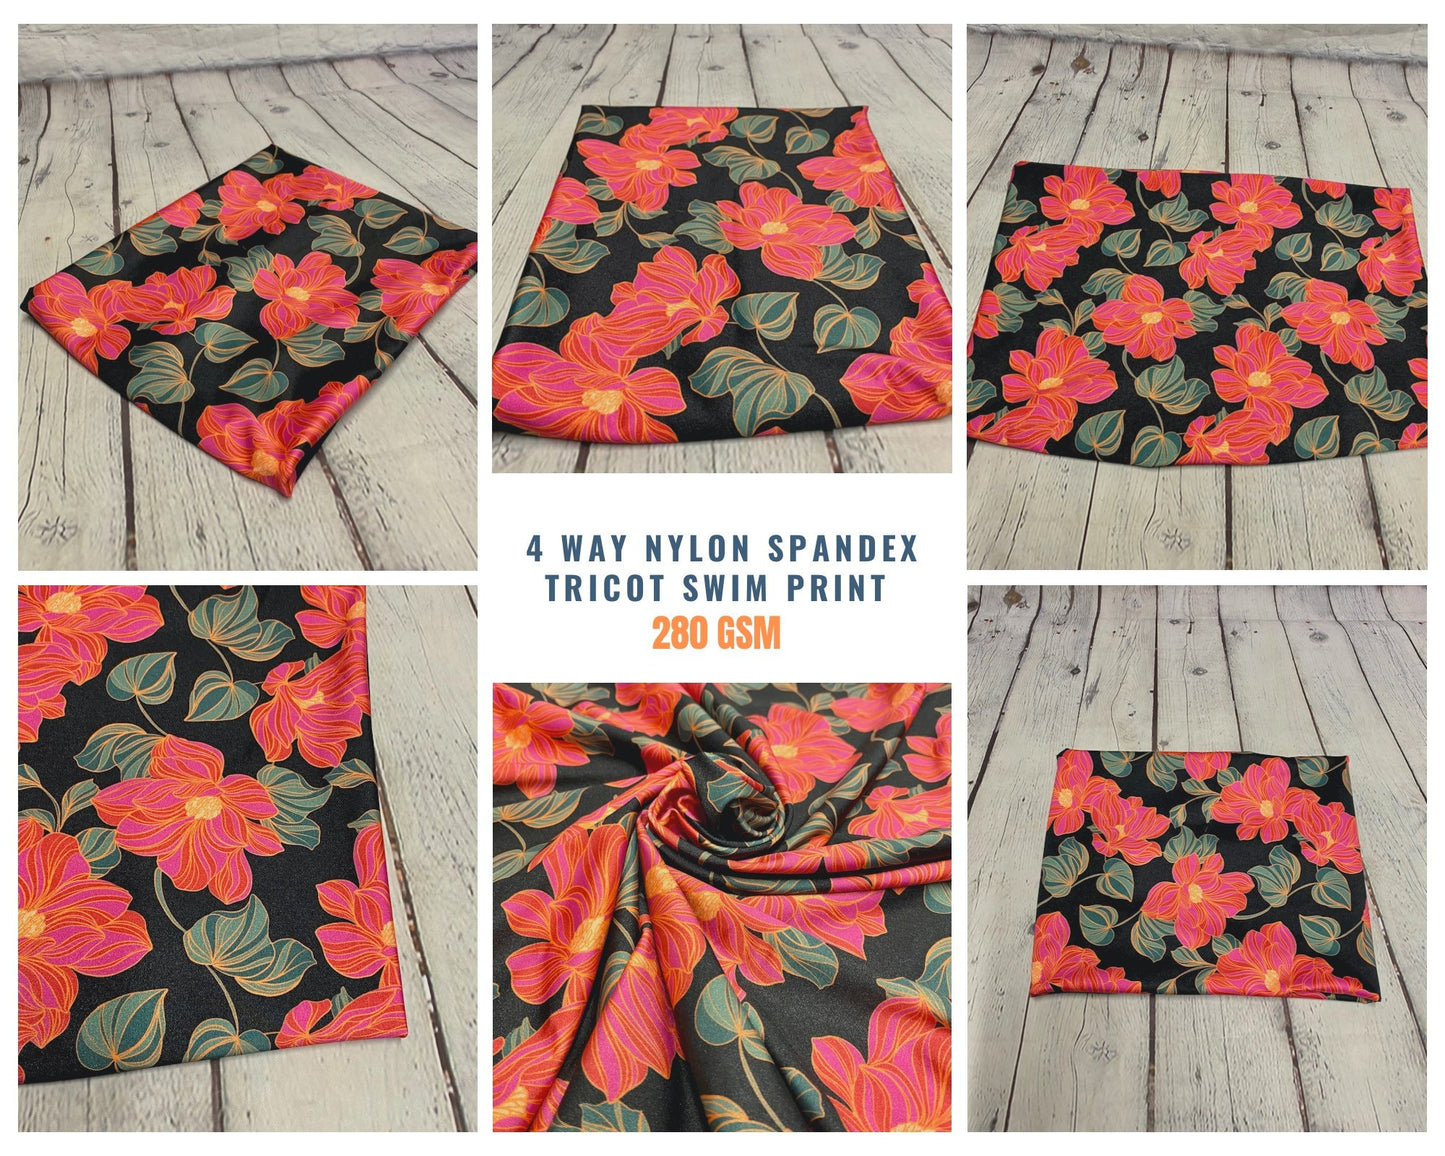 4 Way Stretch Assorted Print Nylon Spandex Fabric By The Yard Tricot Swim Wear Bikini Active wear Floral Medium Flower Pink Print 280 GSM